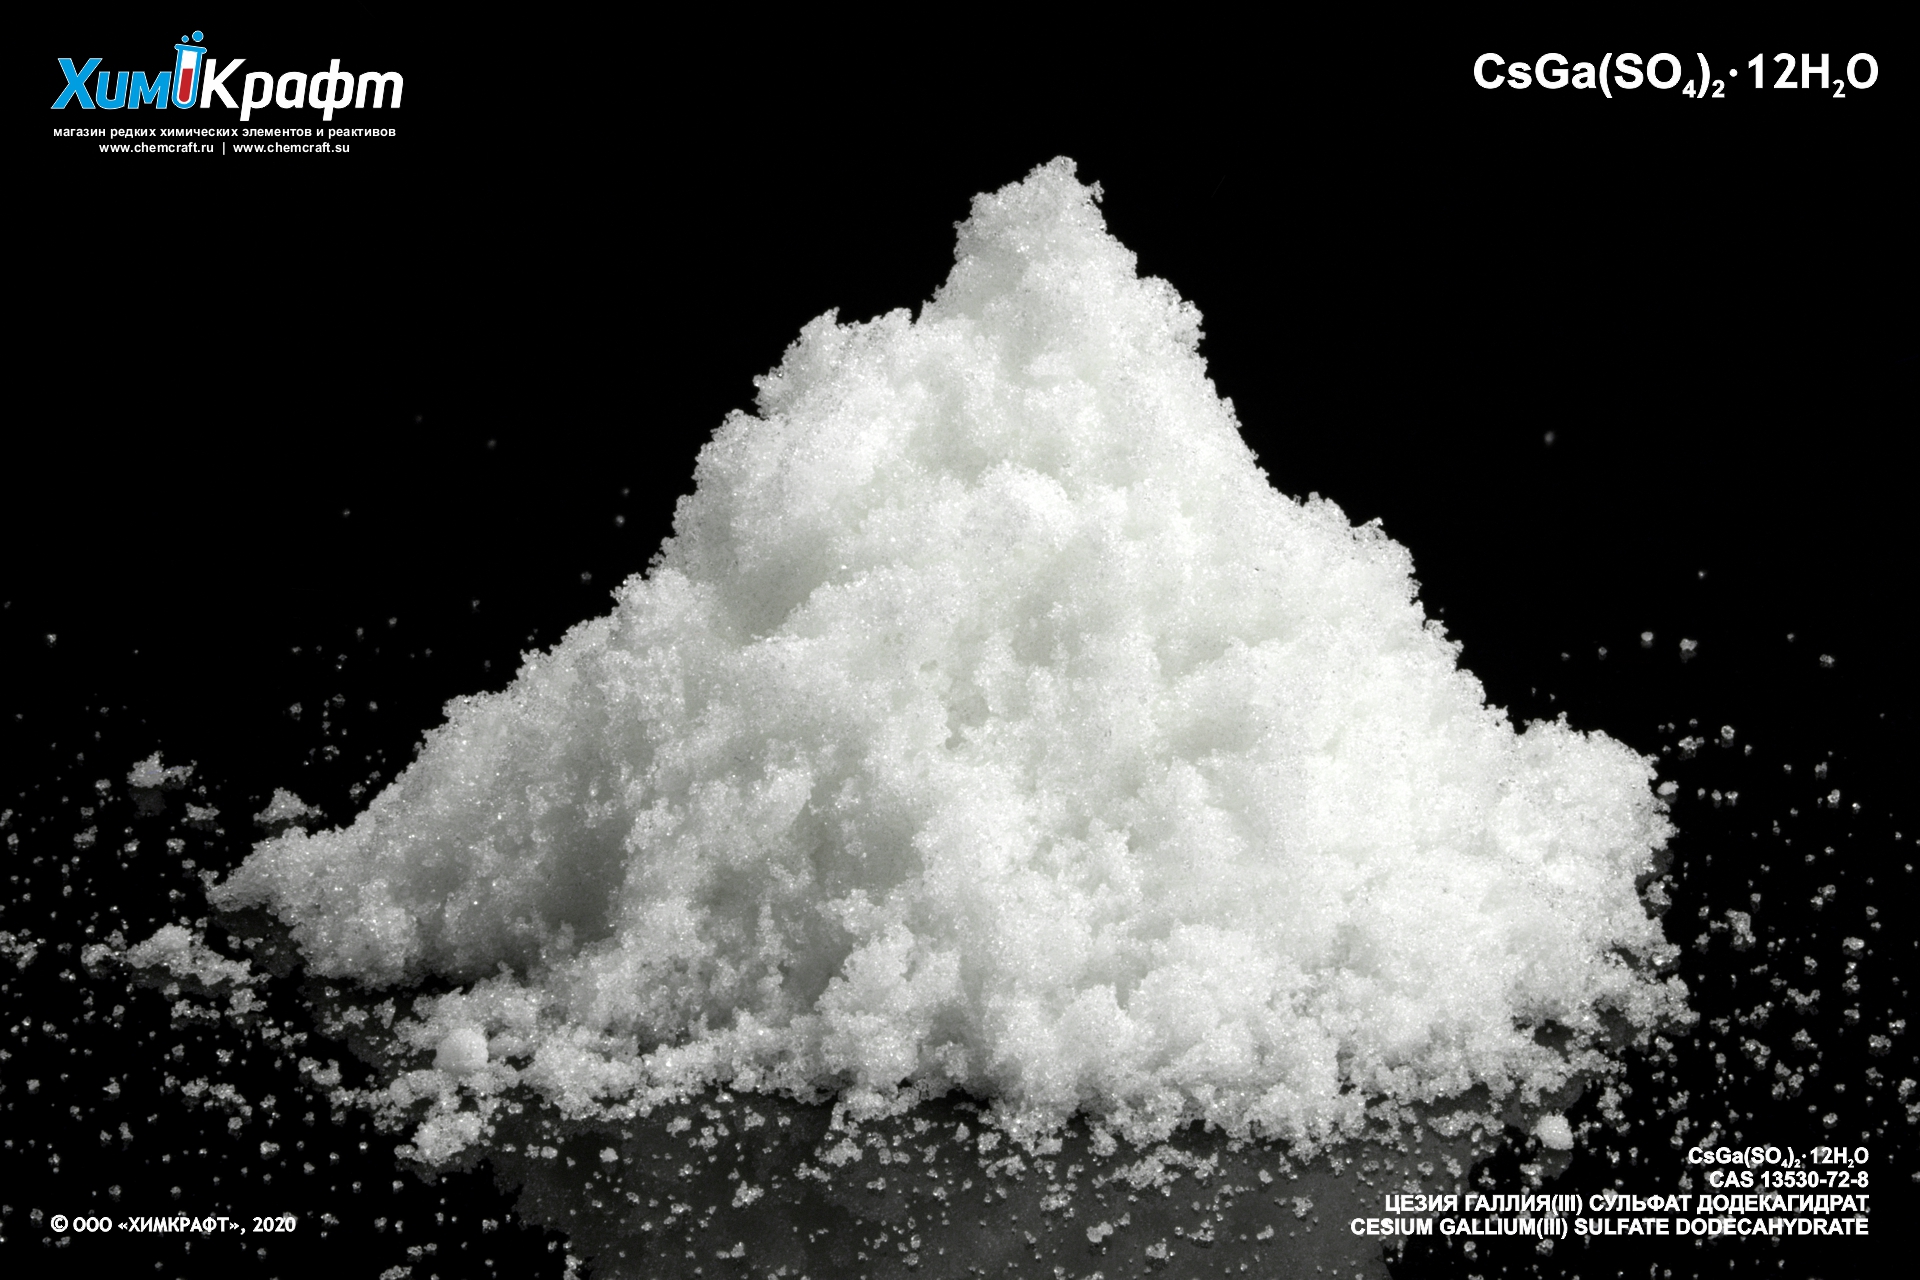 Цезия галлия(III) сульфат додекагидрат, 99.9%